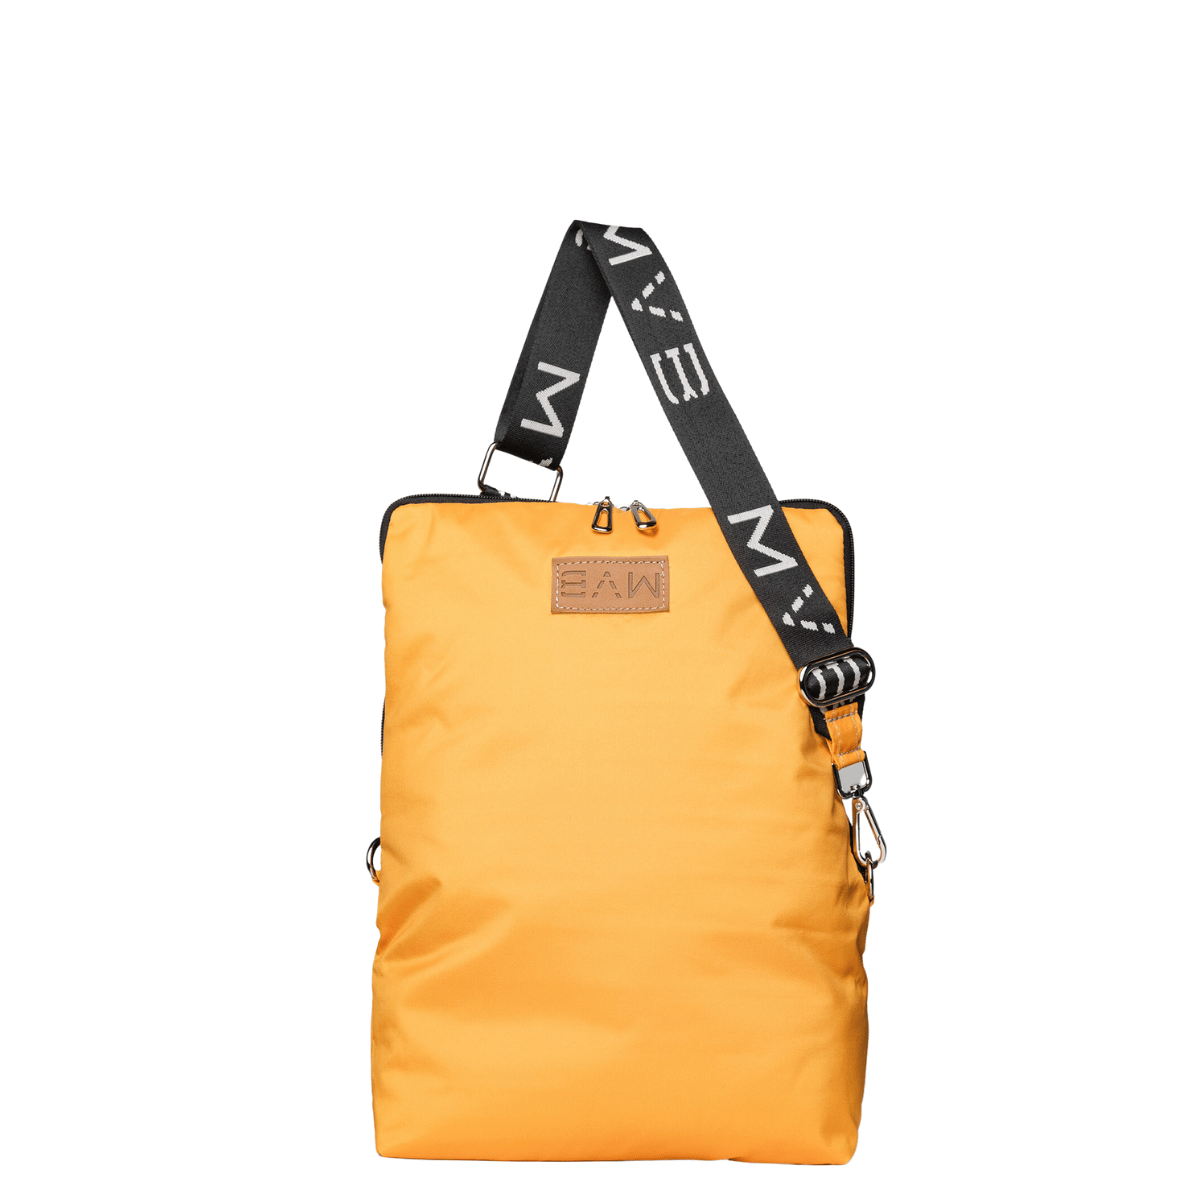 The Flip bag yellow